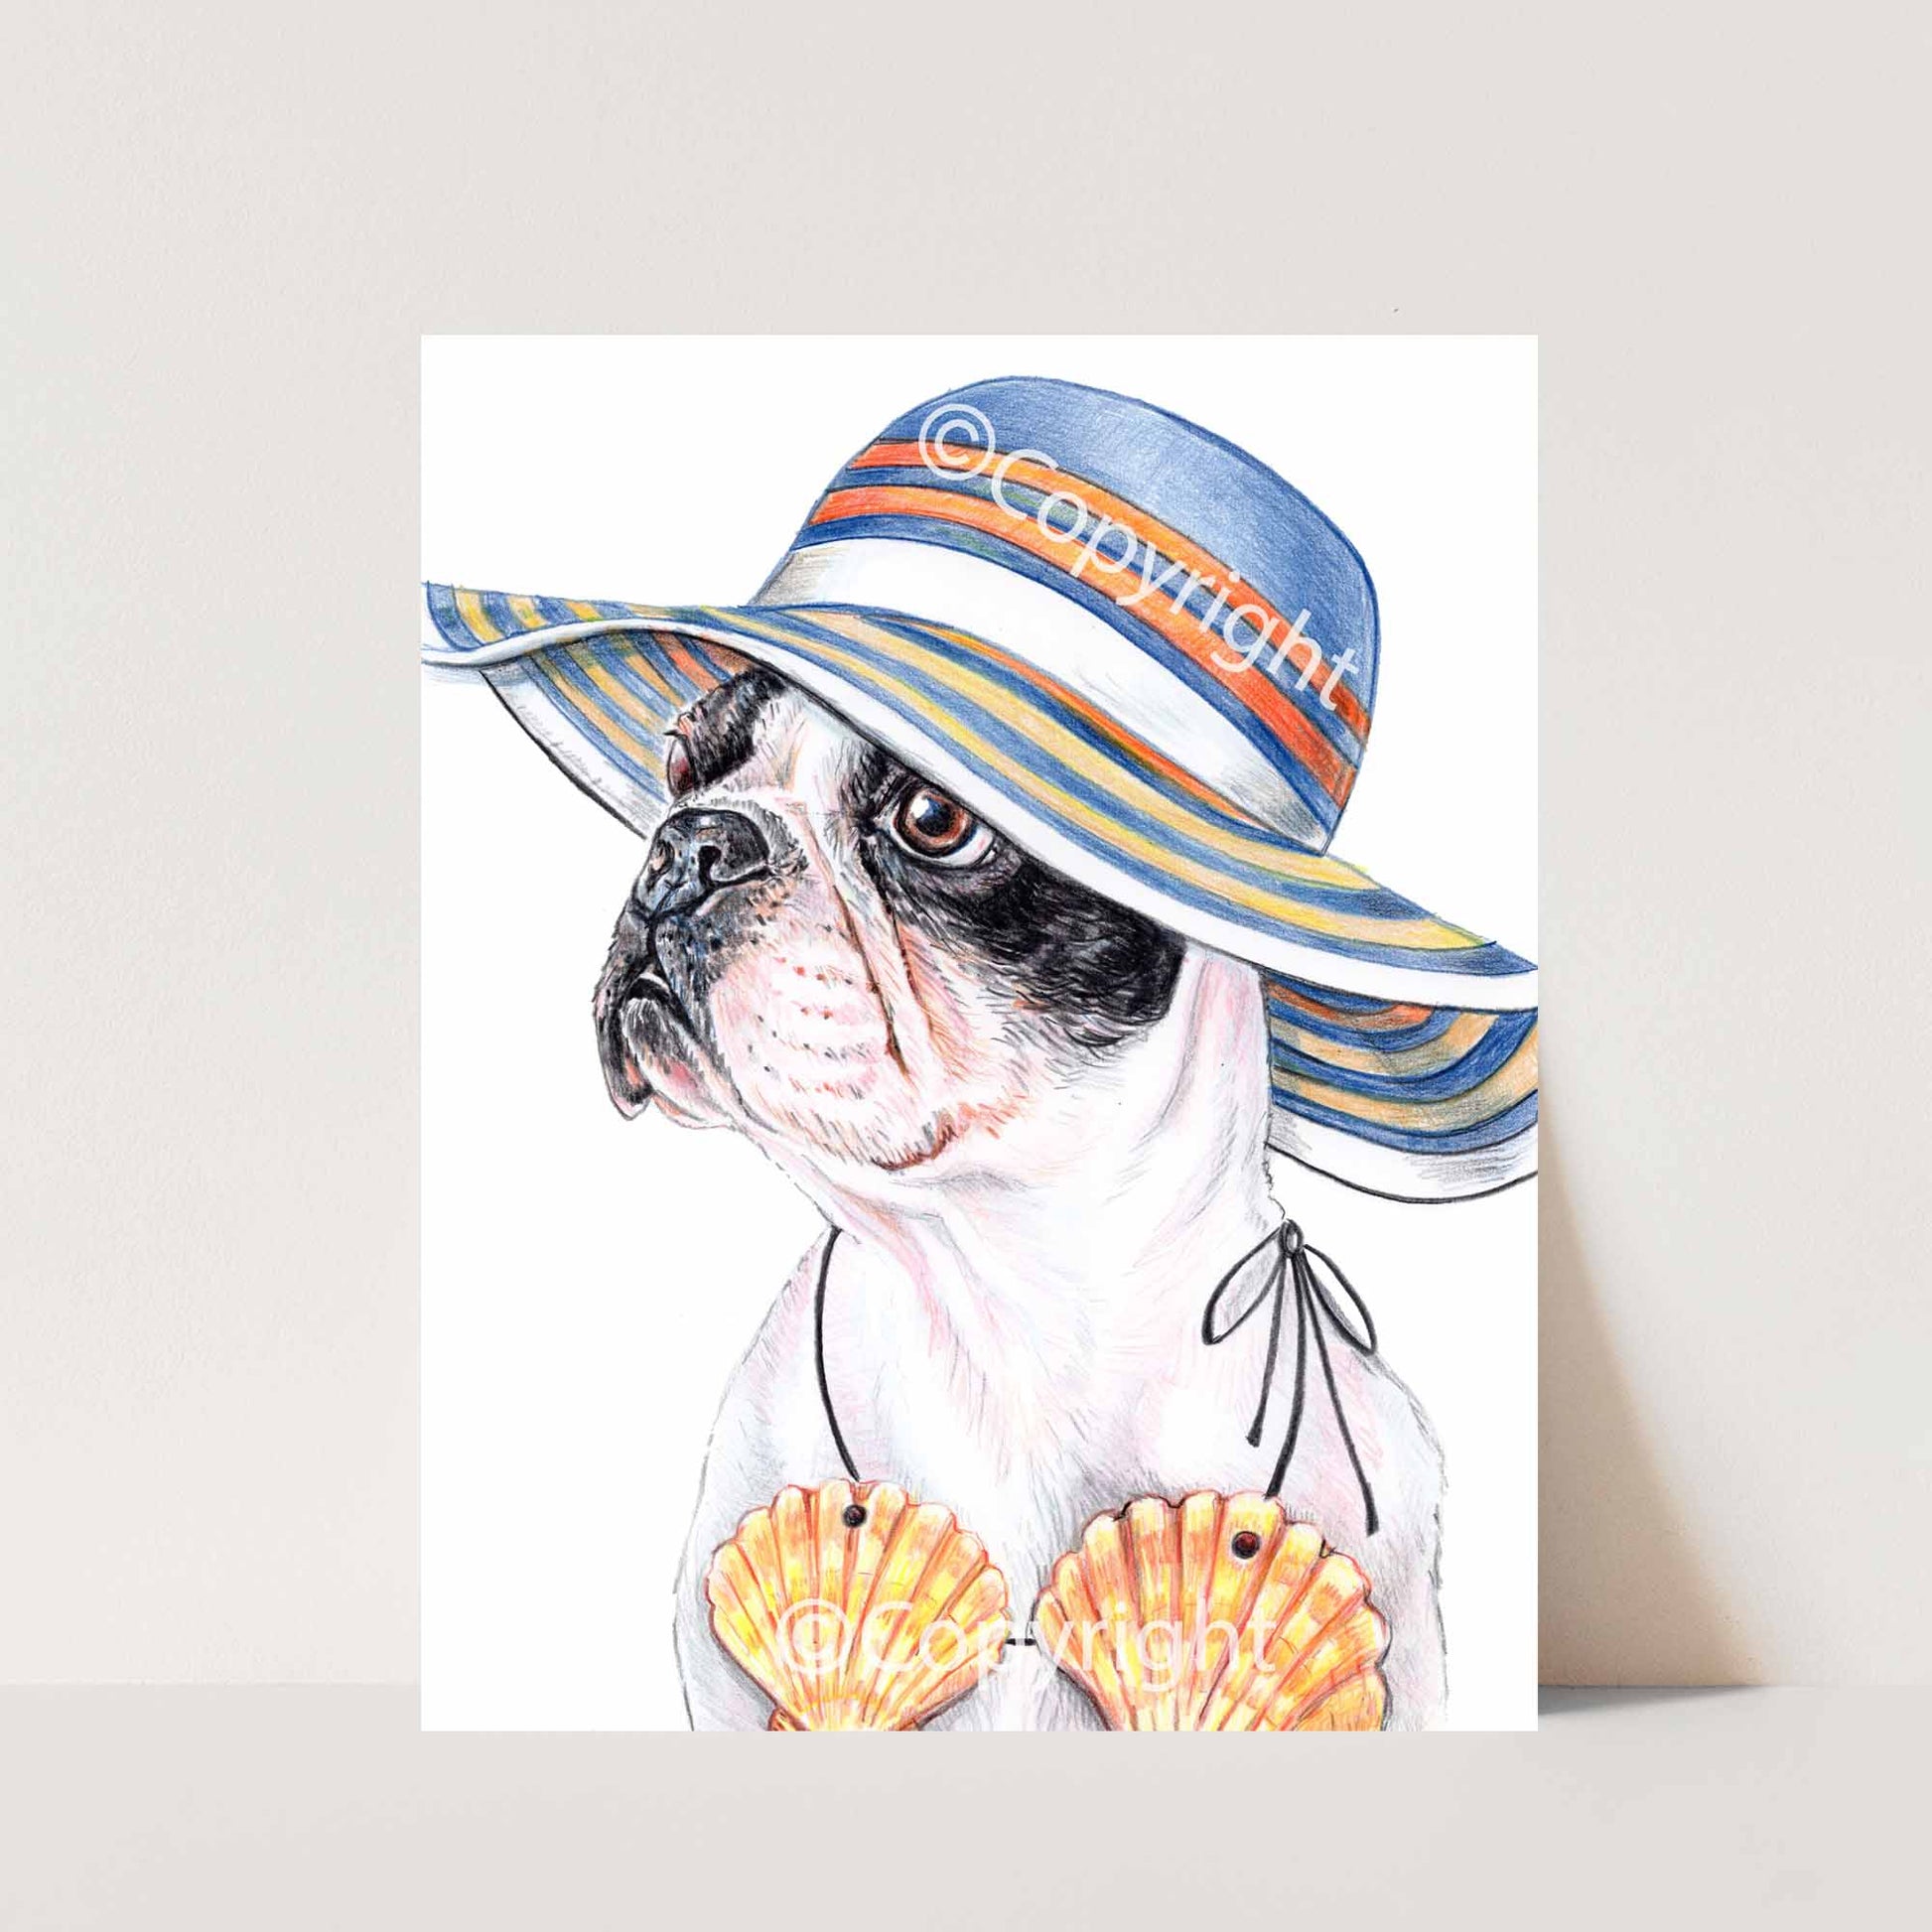 Crayon drawing of a boston terrier dog wearing a sun hat and a sea shell bikini. Art by Deidre Wicks